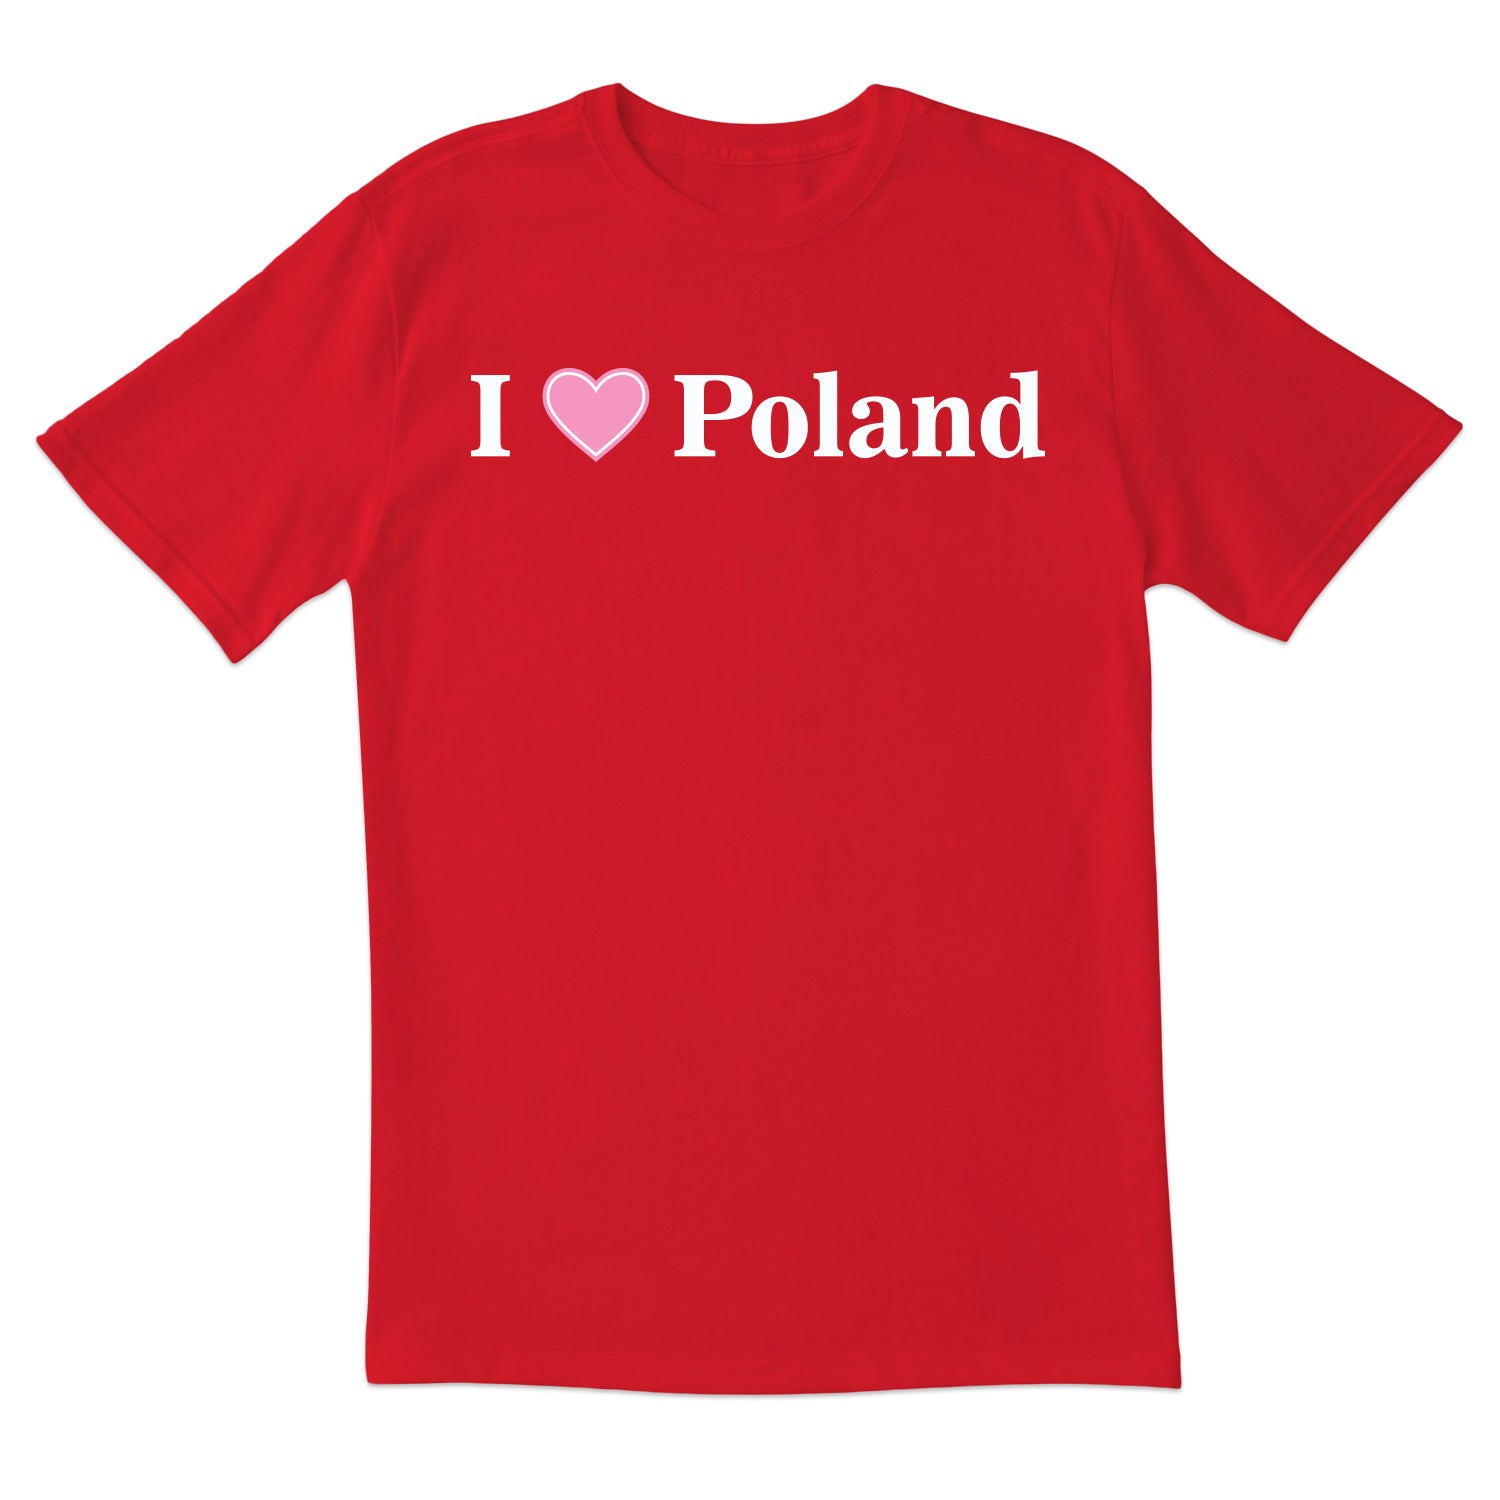 I Love Poland Short Sleeve Tshirt